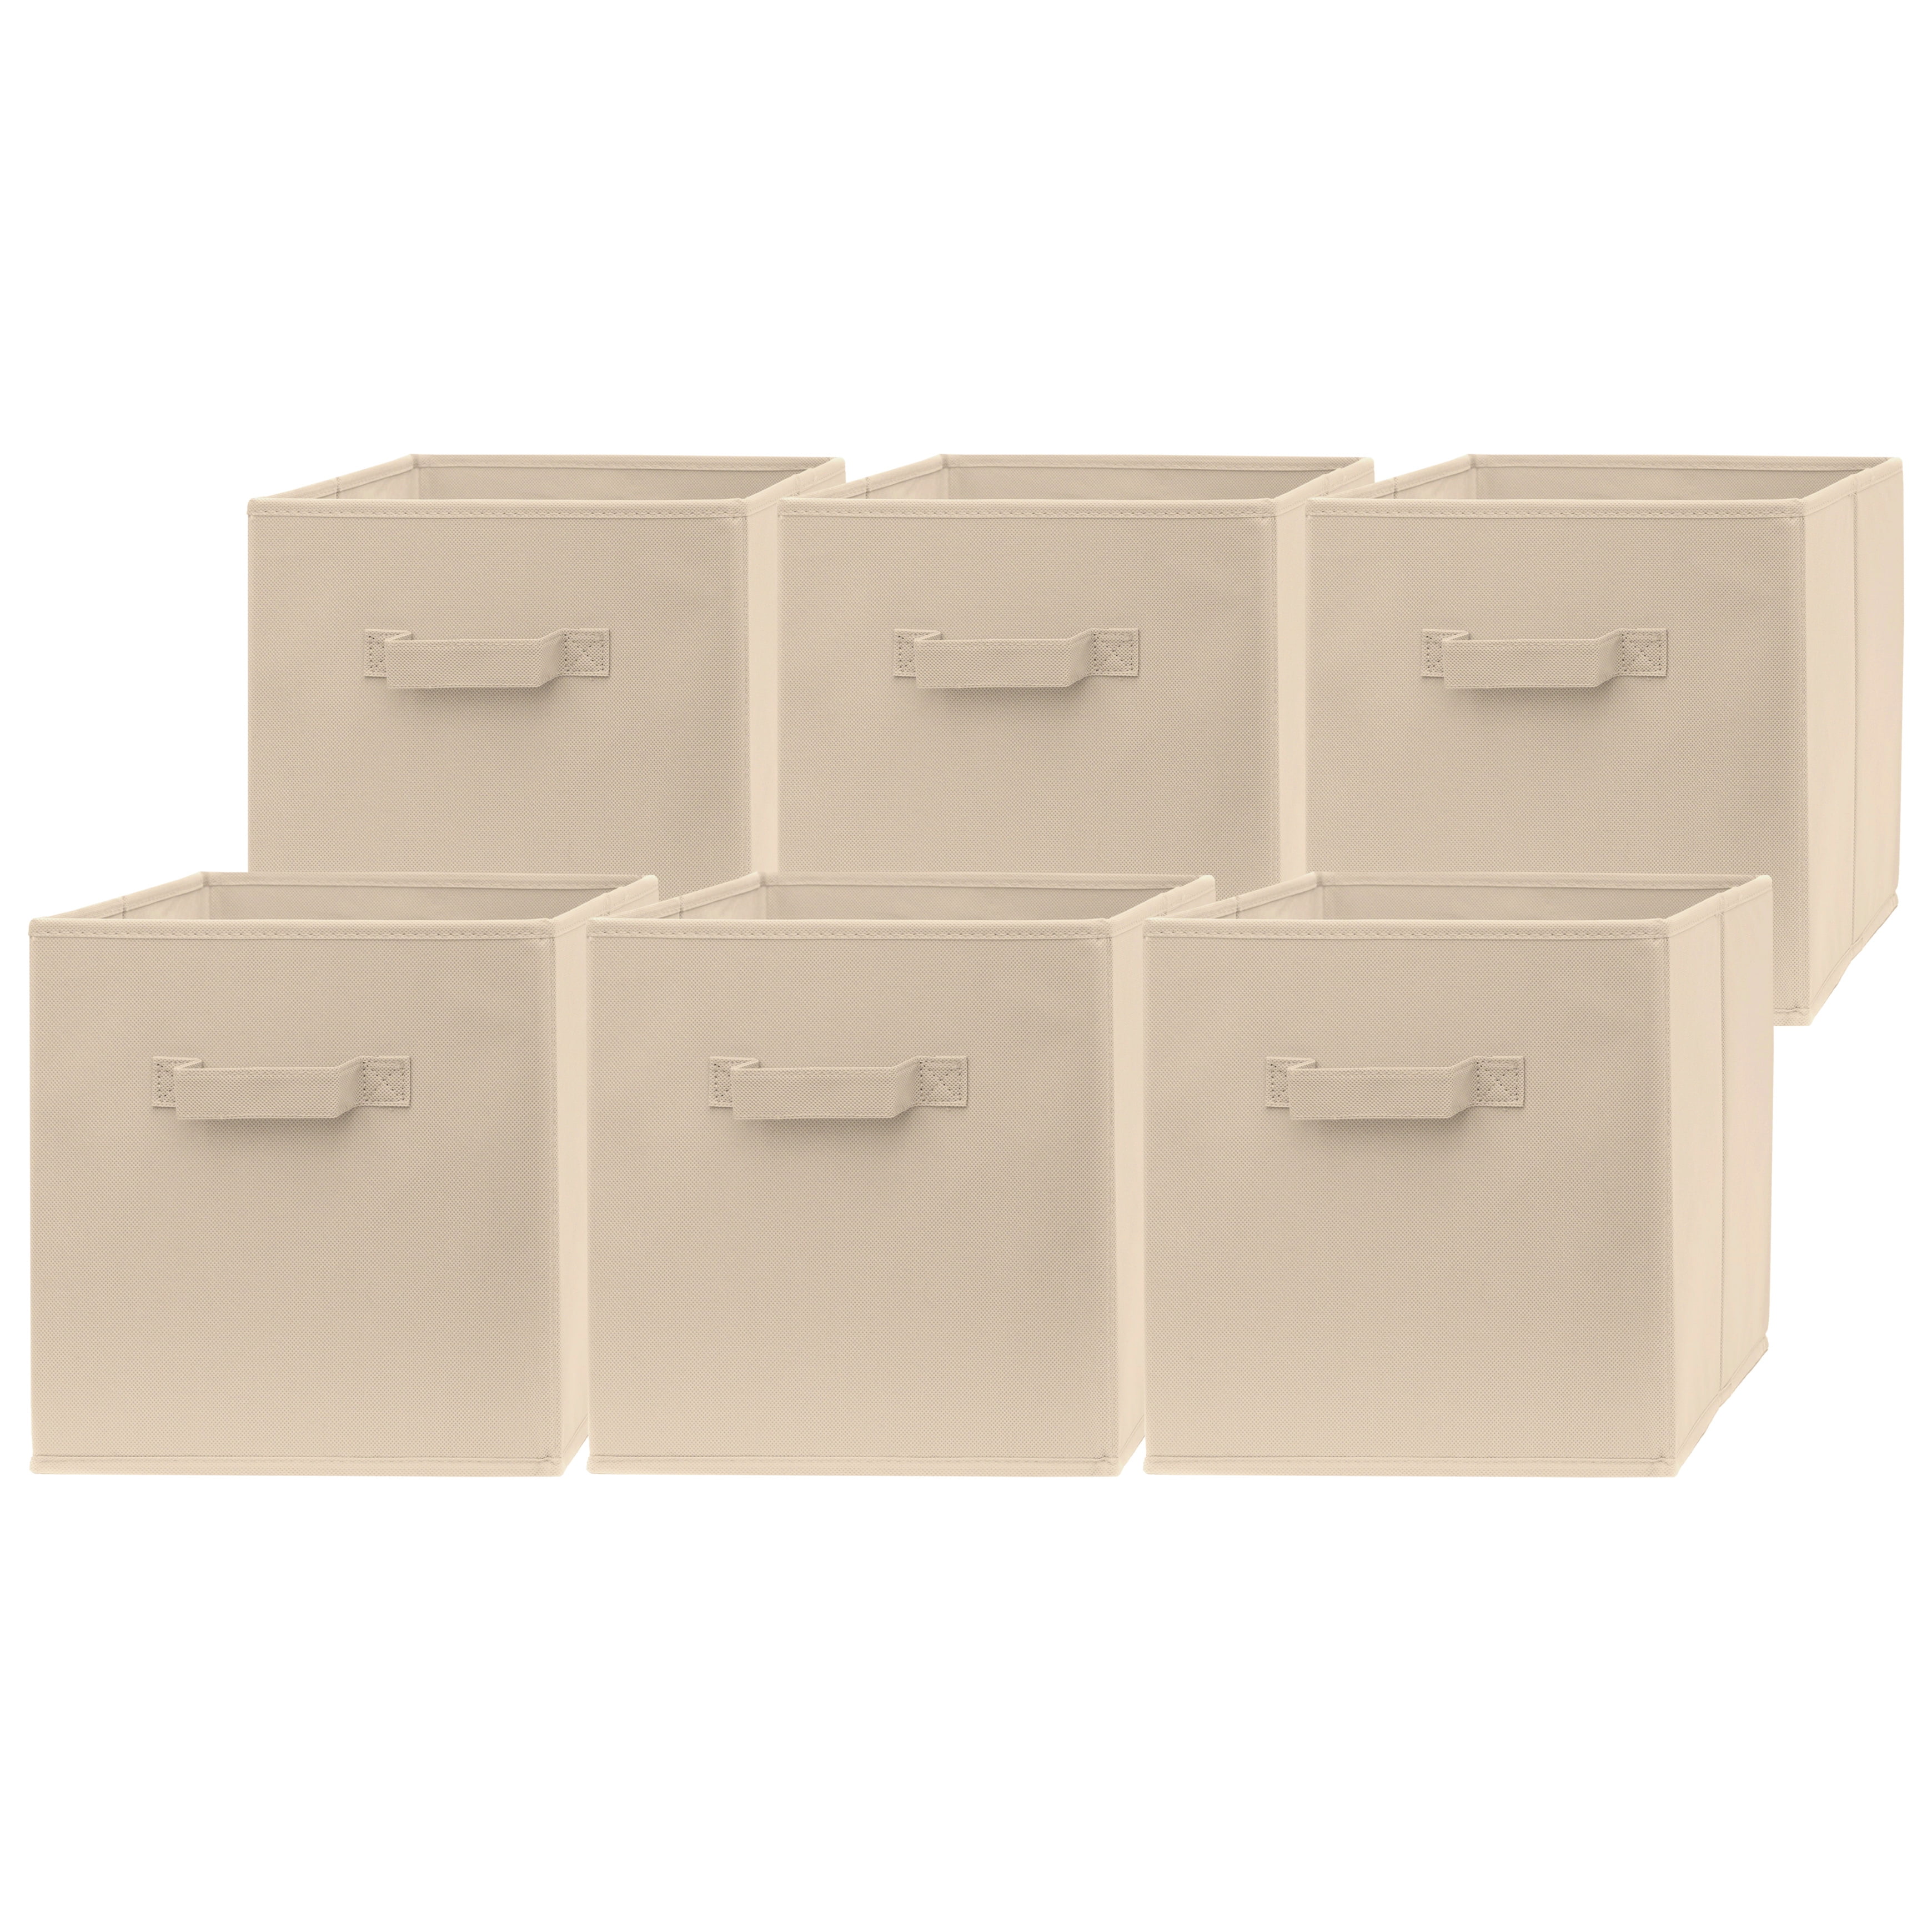 Pomatree 12x12 Storage Cube Bins - 6 Pack - Fabric Cube Storage Bin (Grey)  